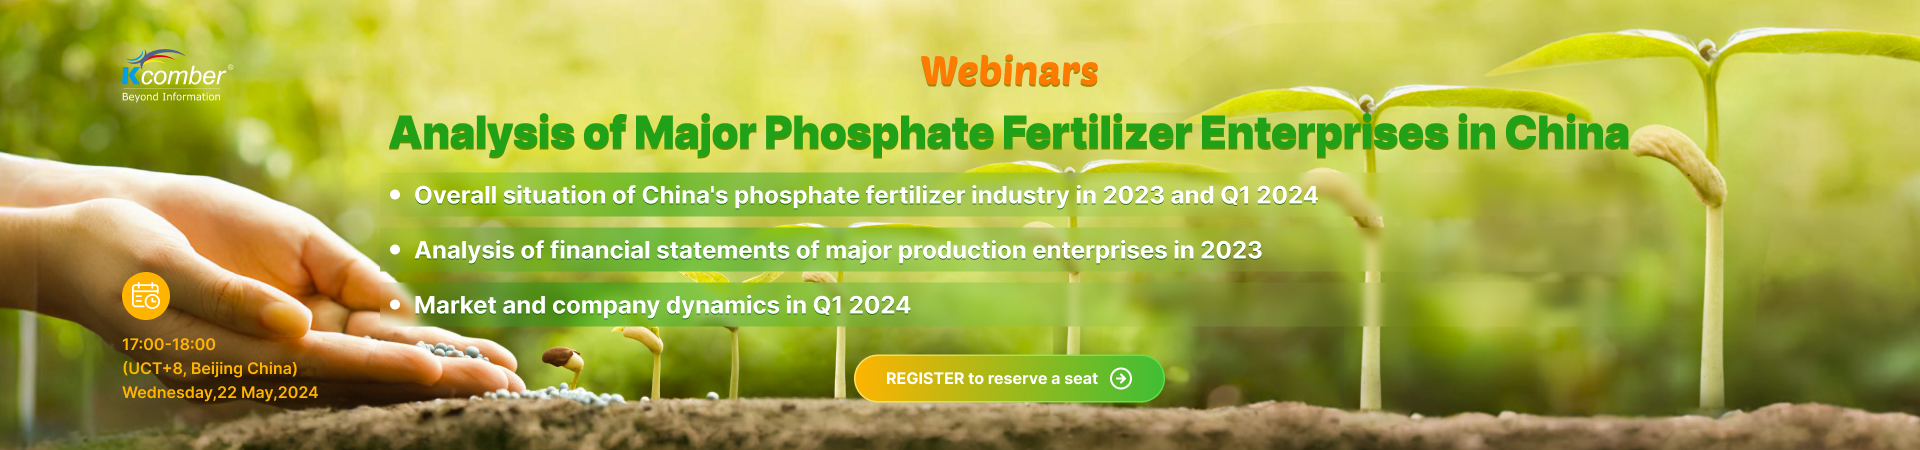 Analysis of Major Phosphate Fertilizer Enterprises in China